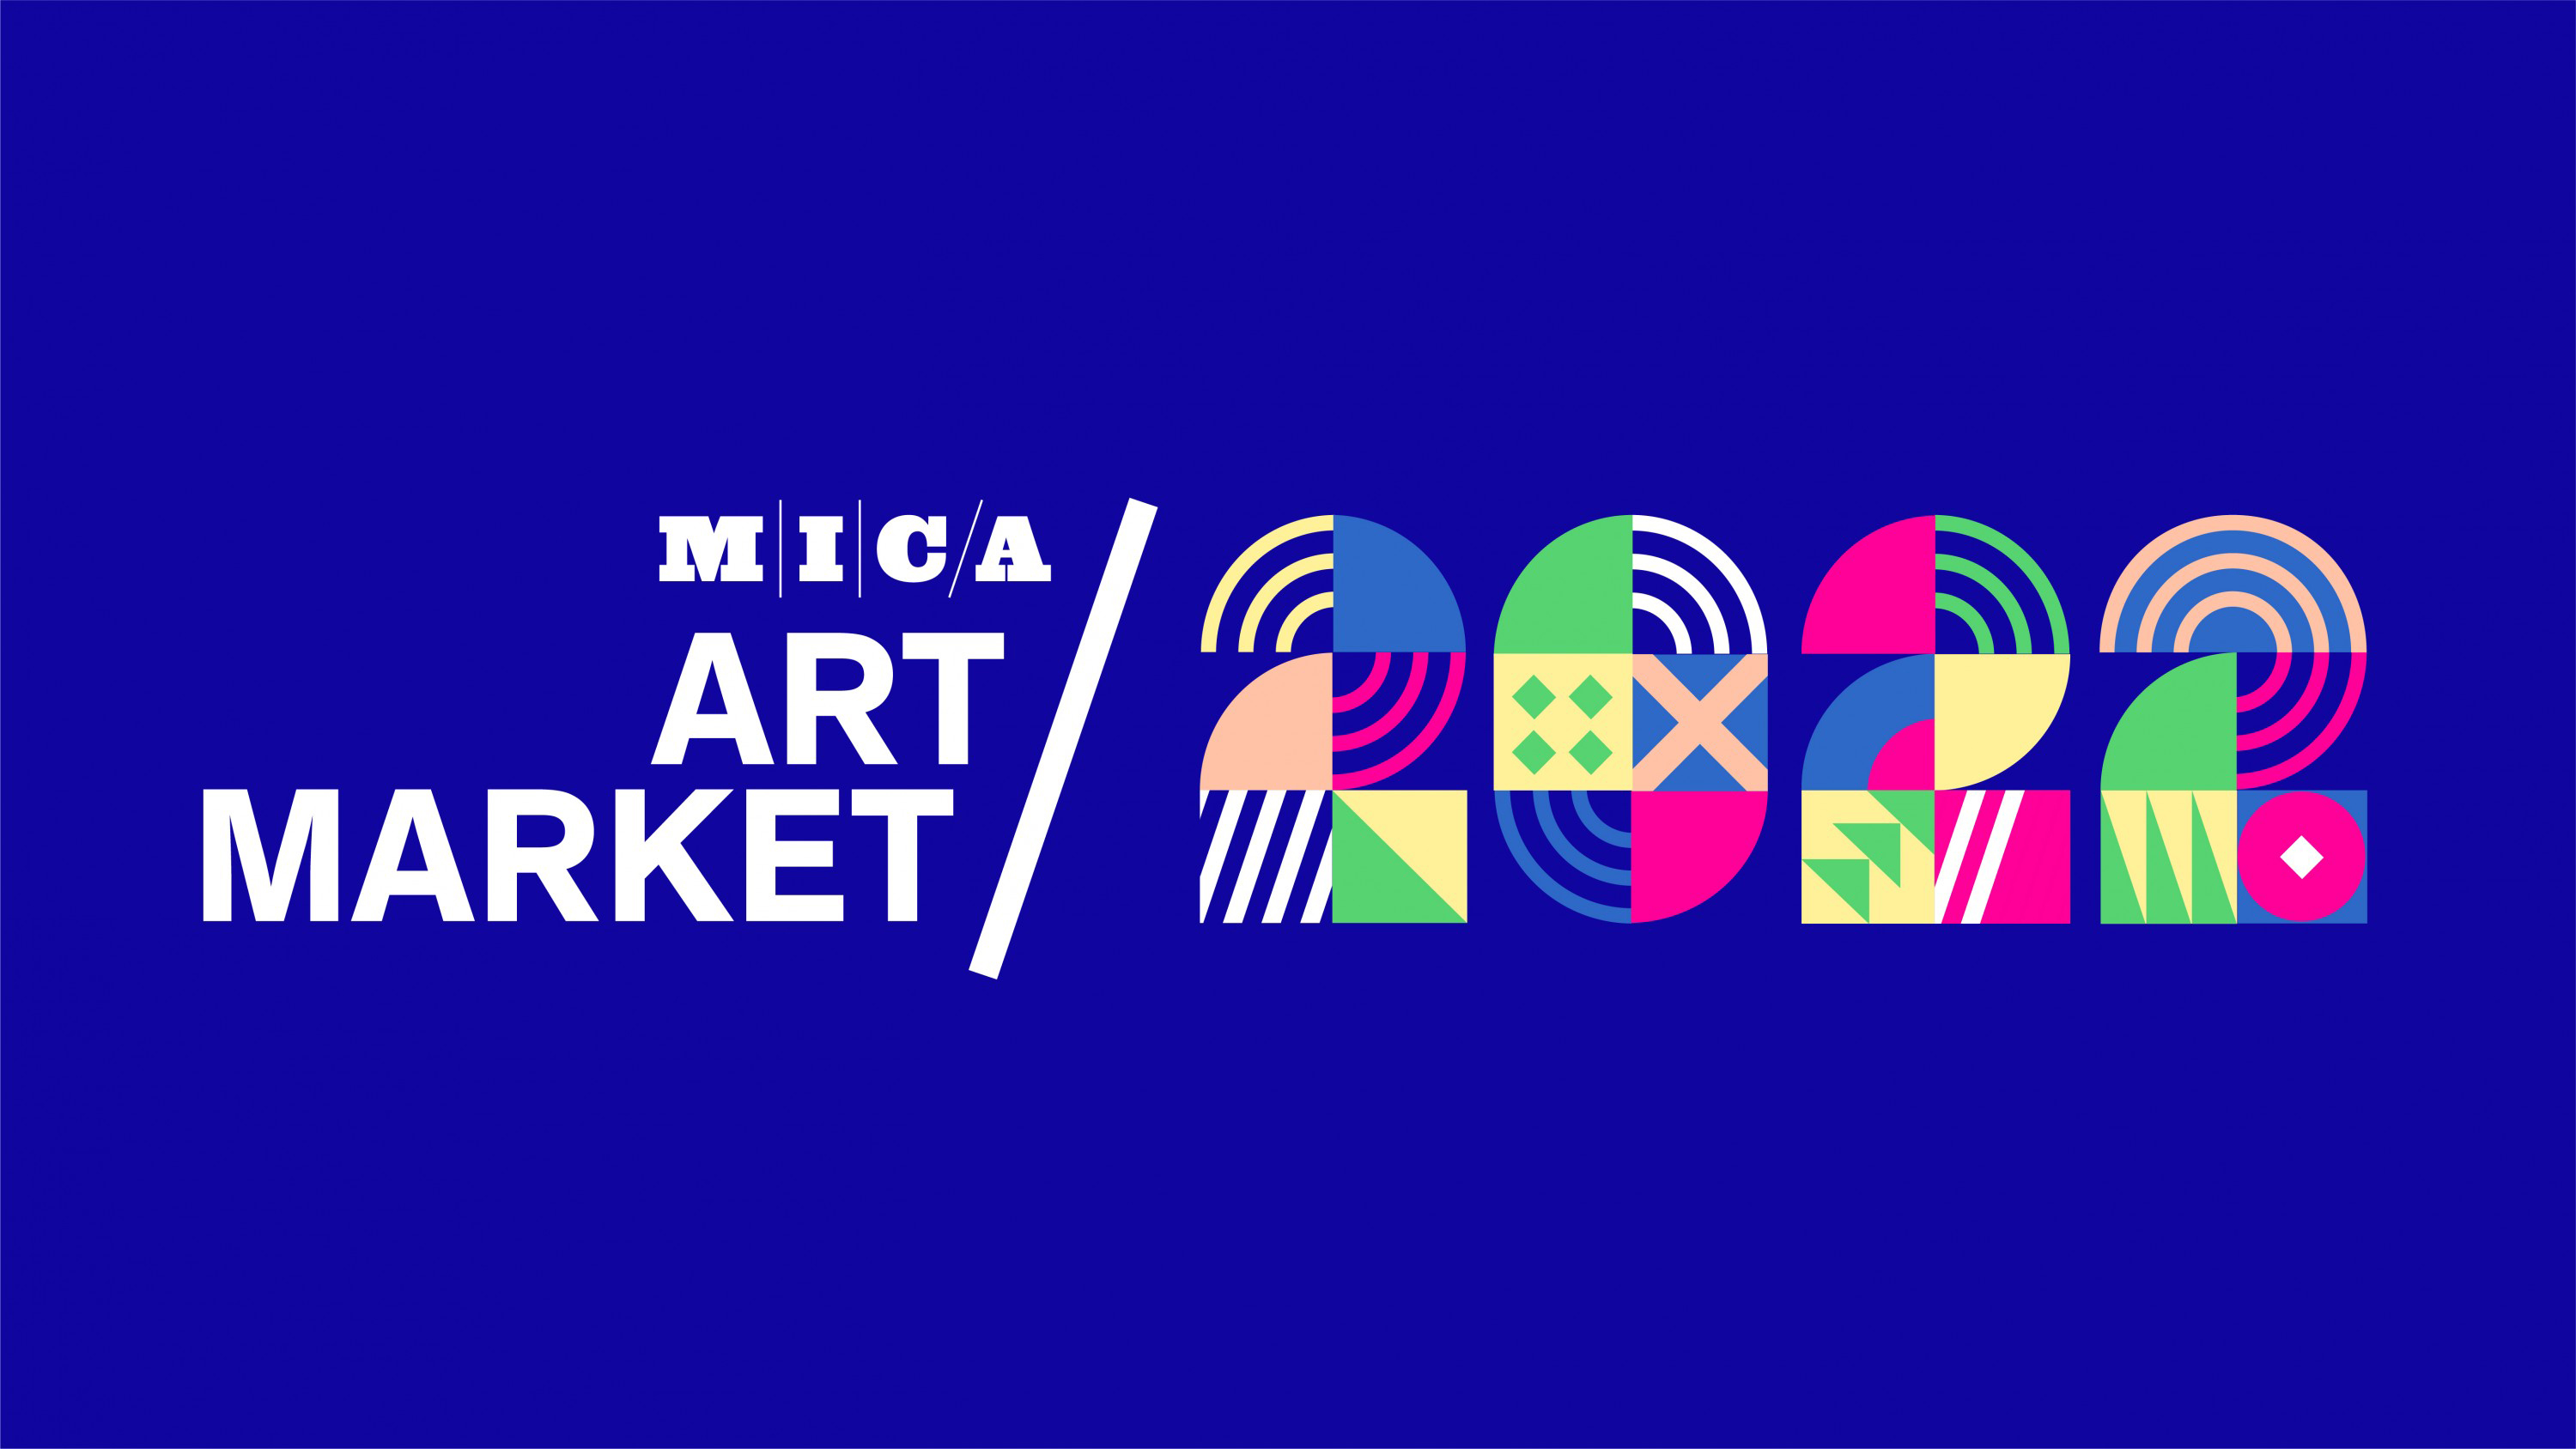 MICA art market